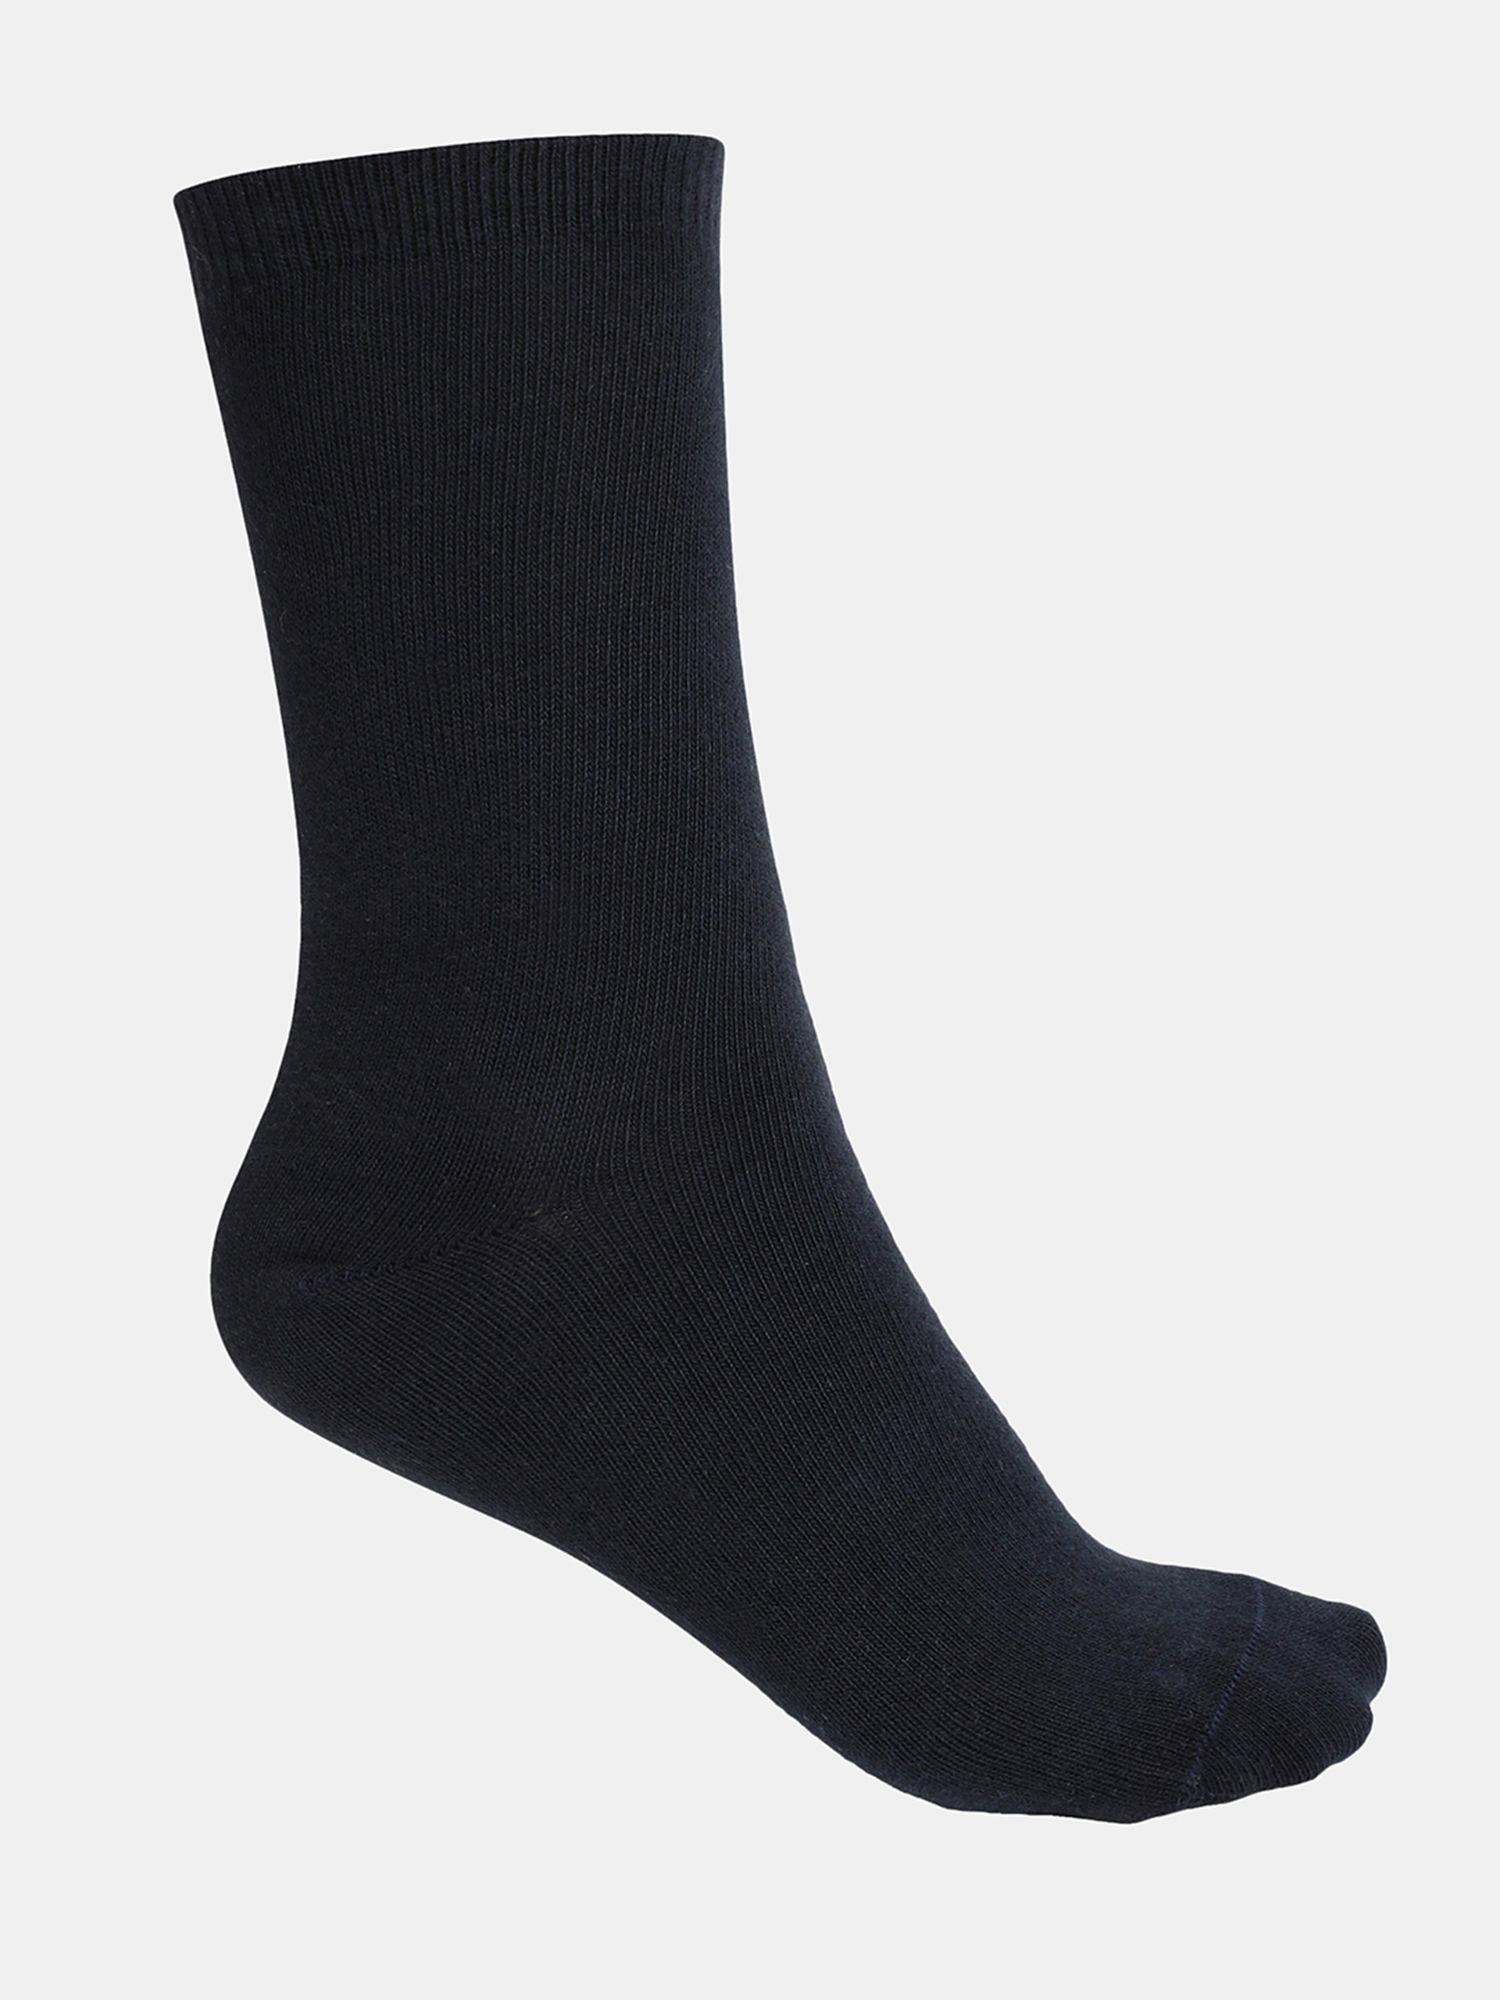 7800 Unisex Cotton Nylon Stretch Calf Length Socks - Navy